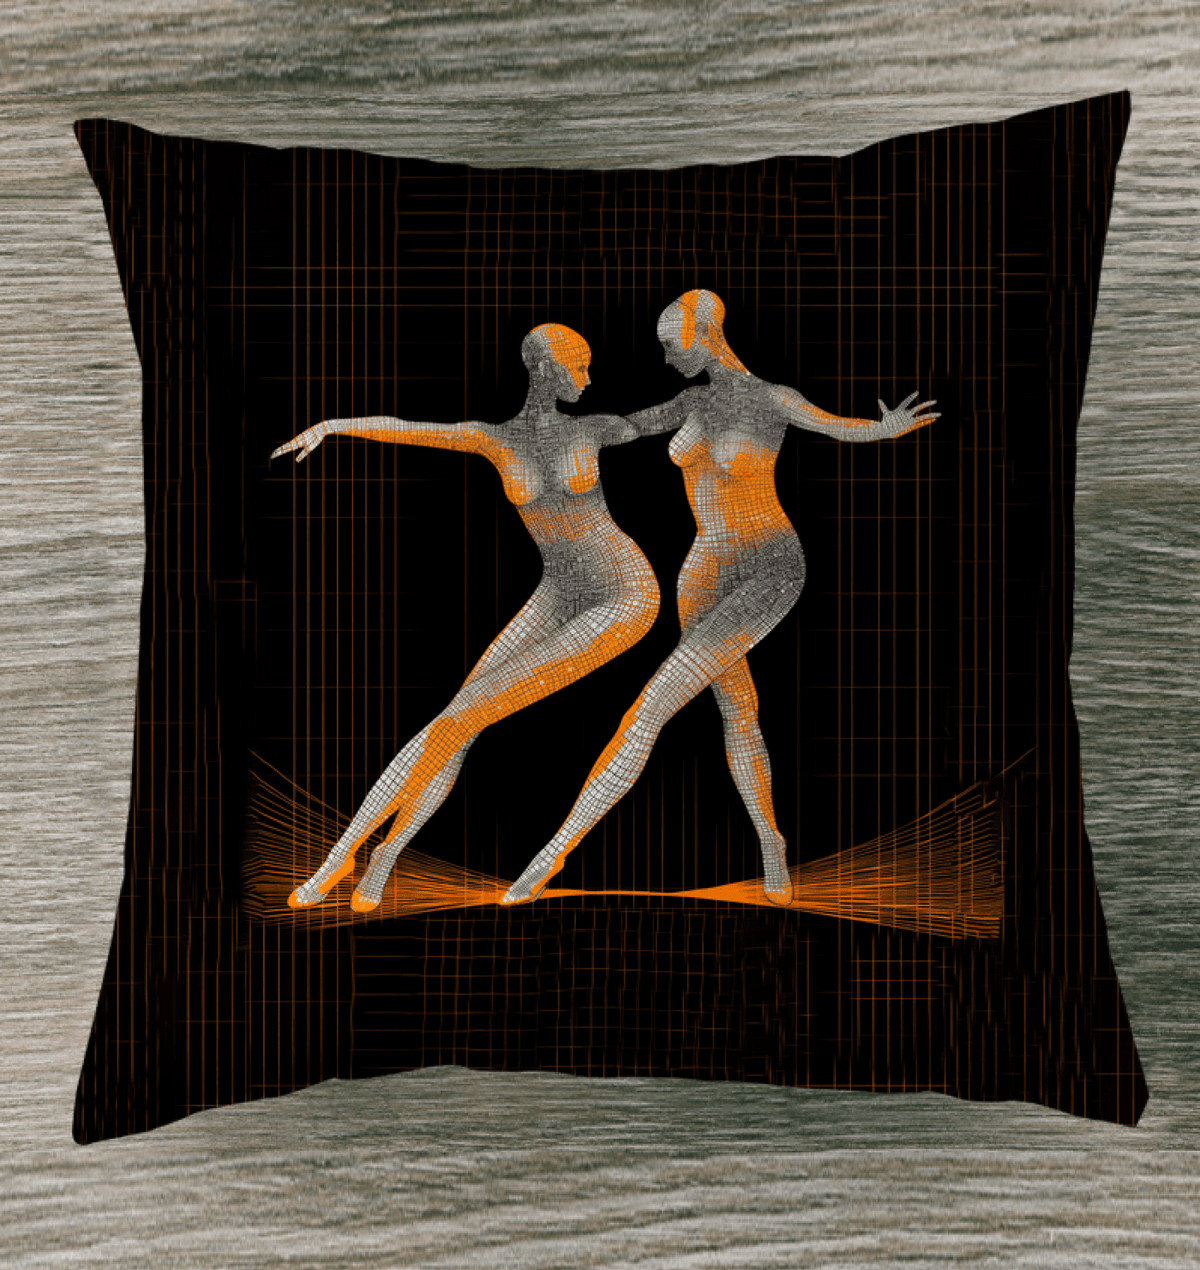 Elegant indoor pillow with women's dance attire design